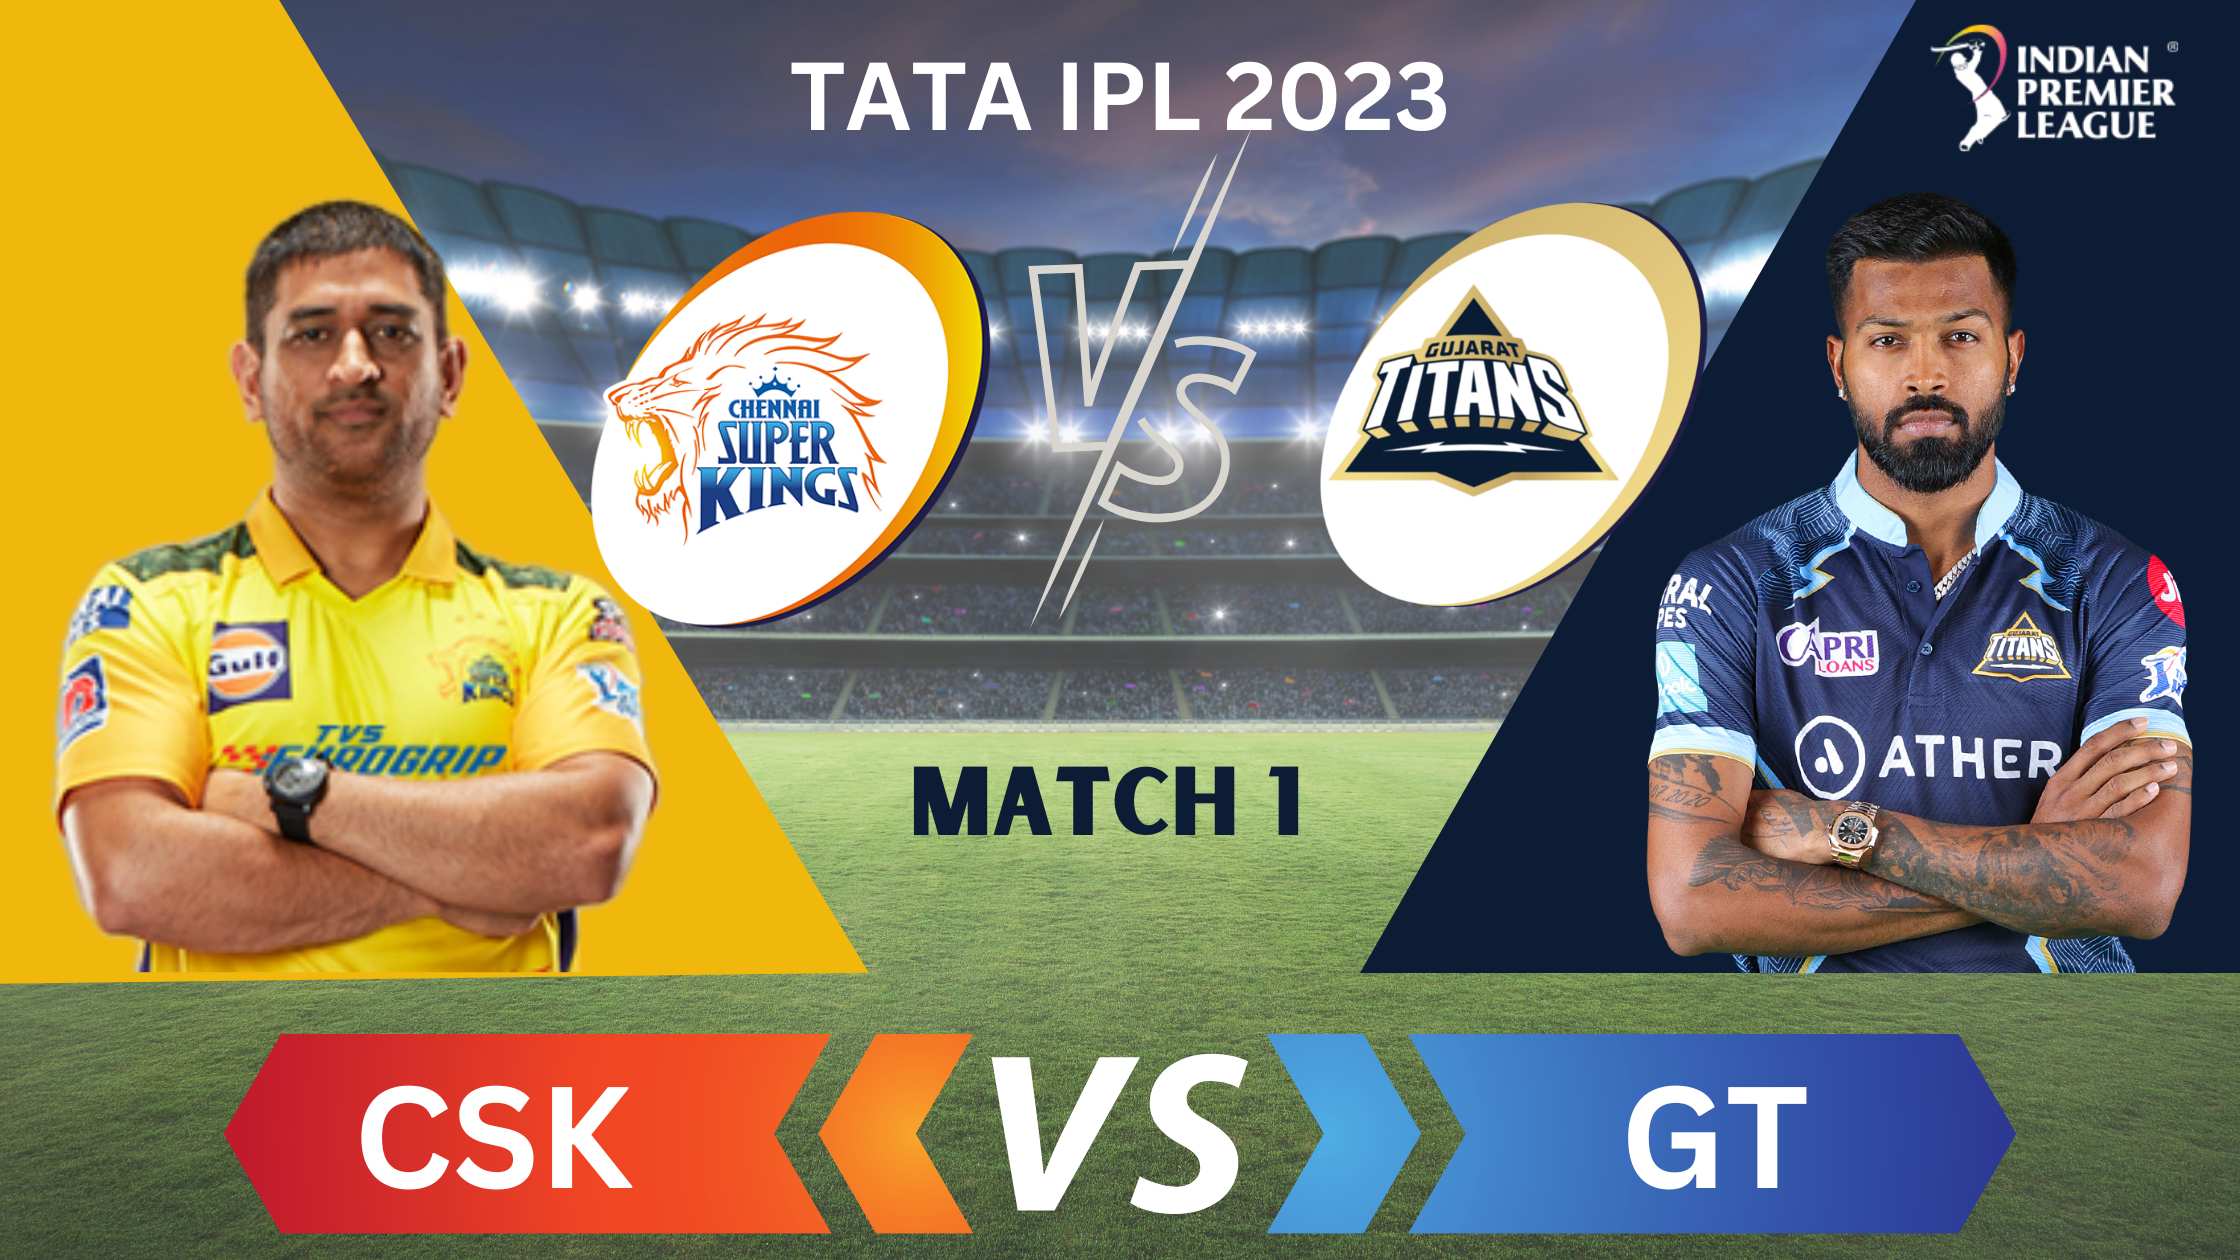 TATA IPL CSK vs GT Dream11 Prediction